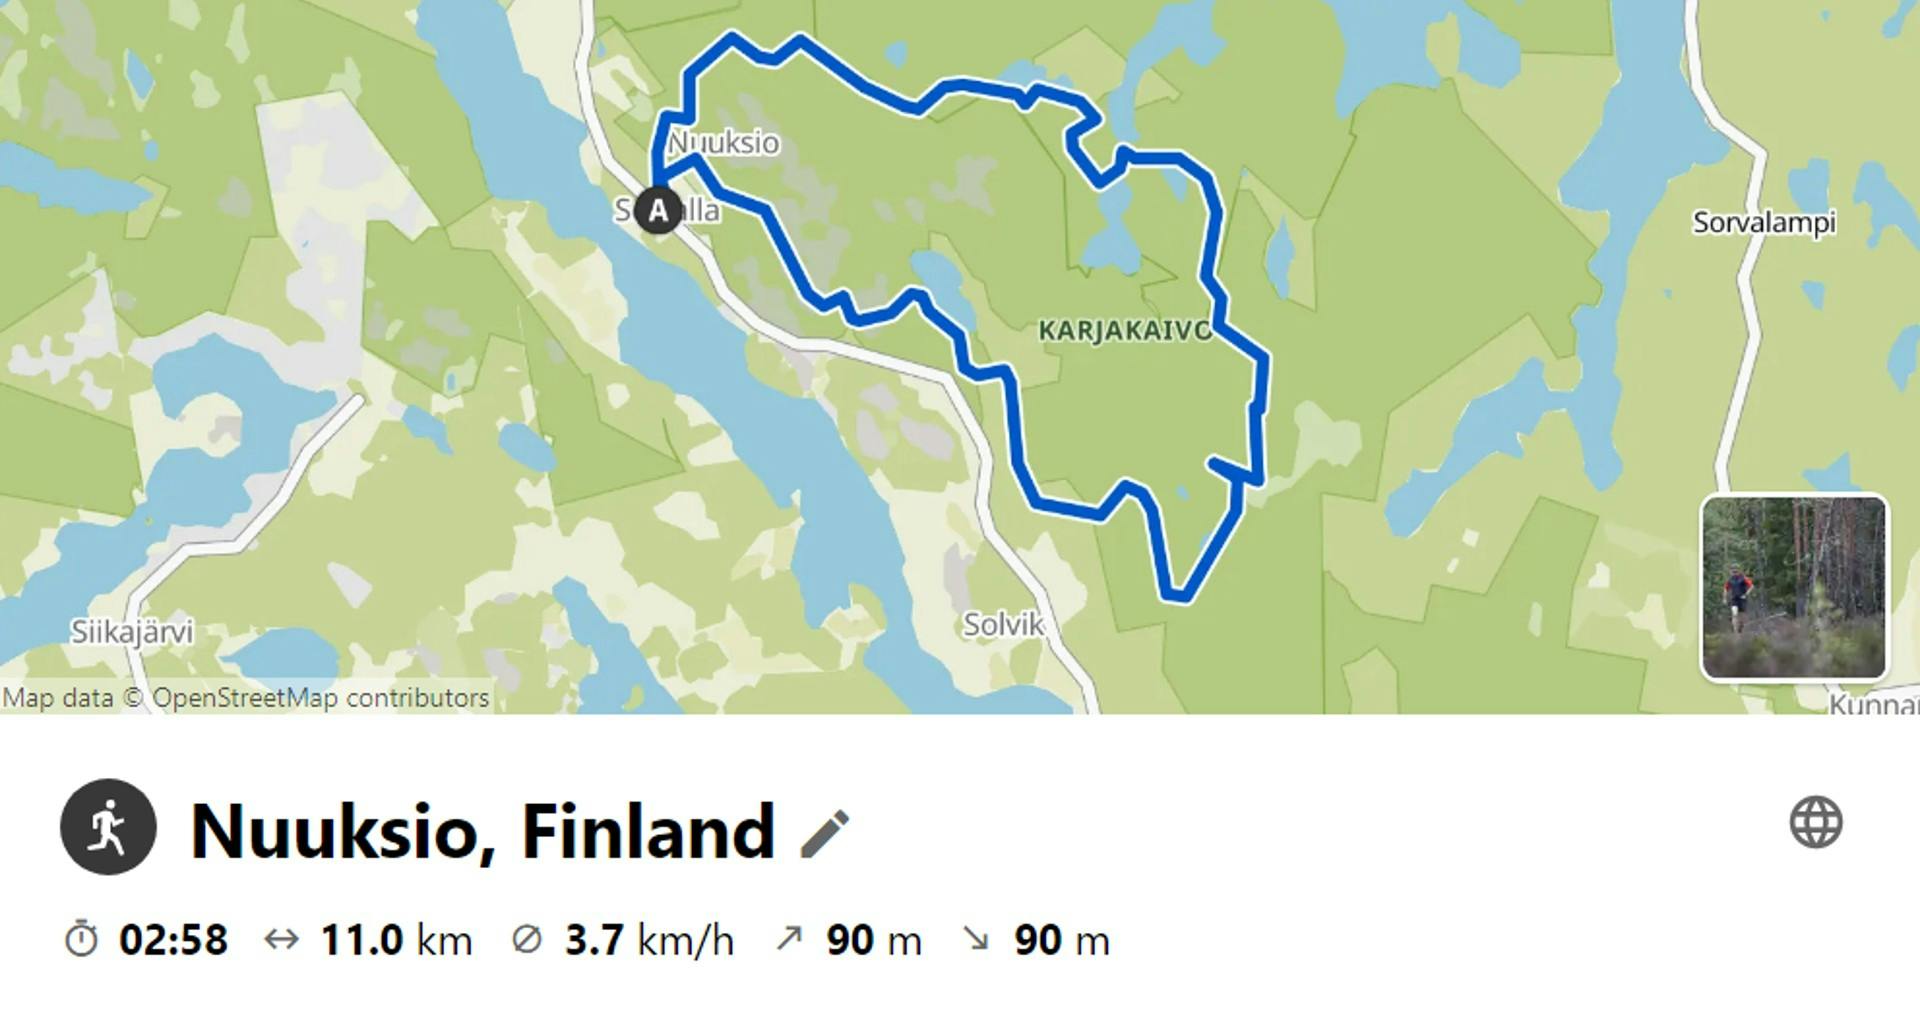 merrell-trails-of-europe-nuuksio-finland